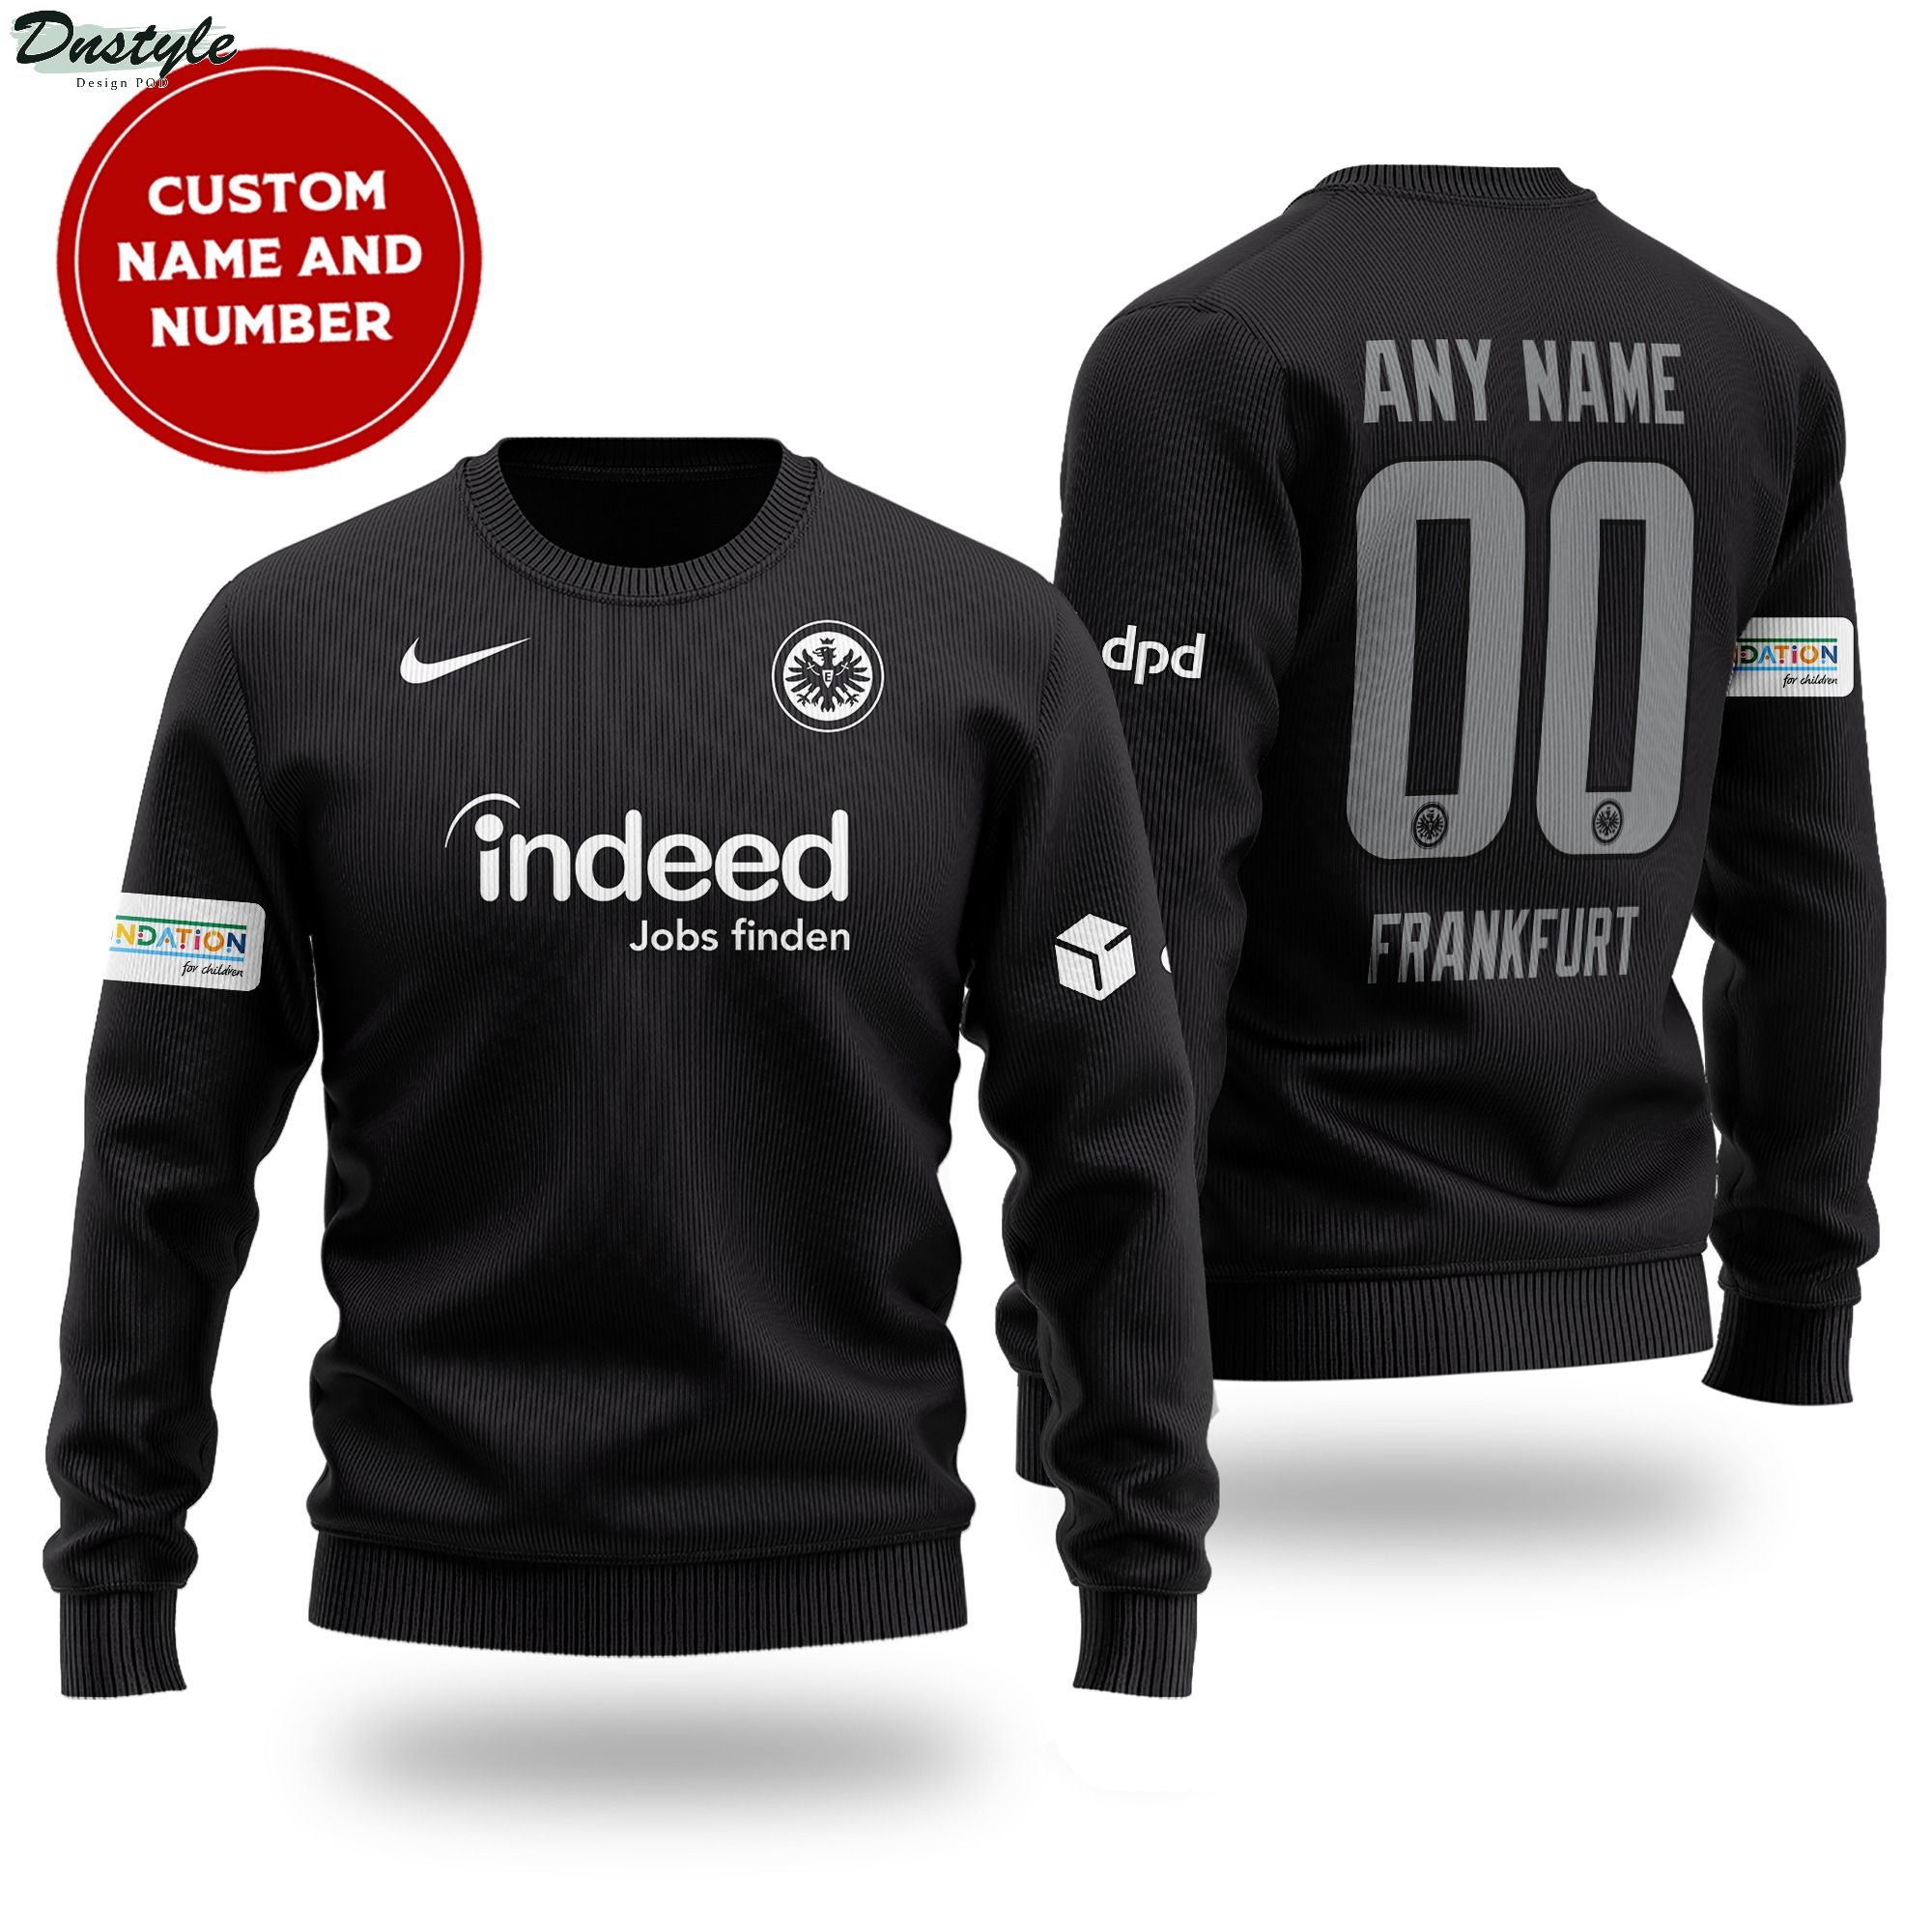 Frankfurt custom name and number ugly sweater